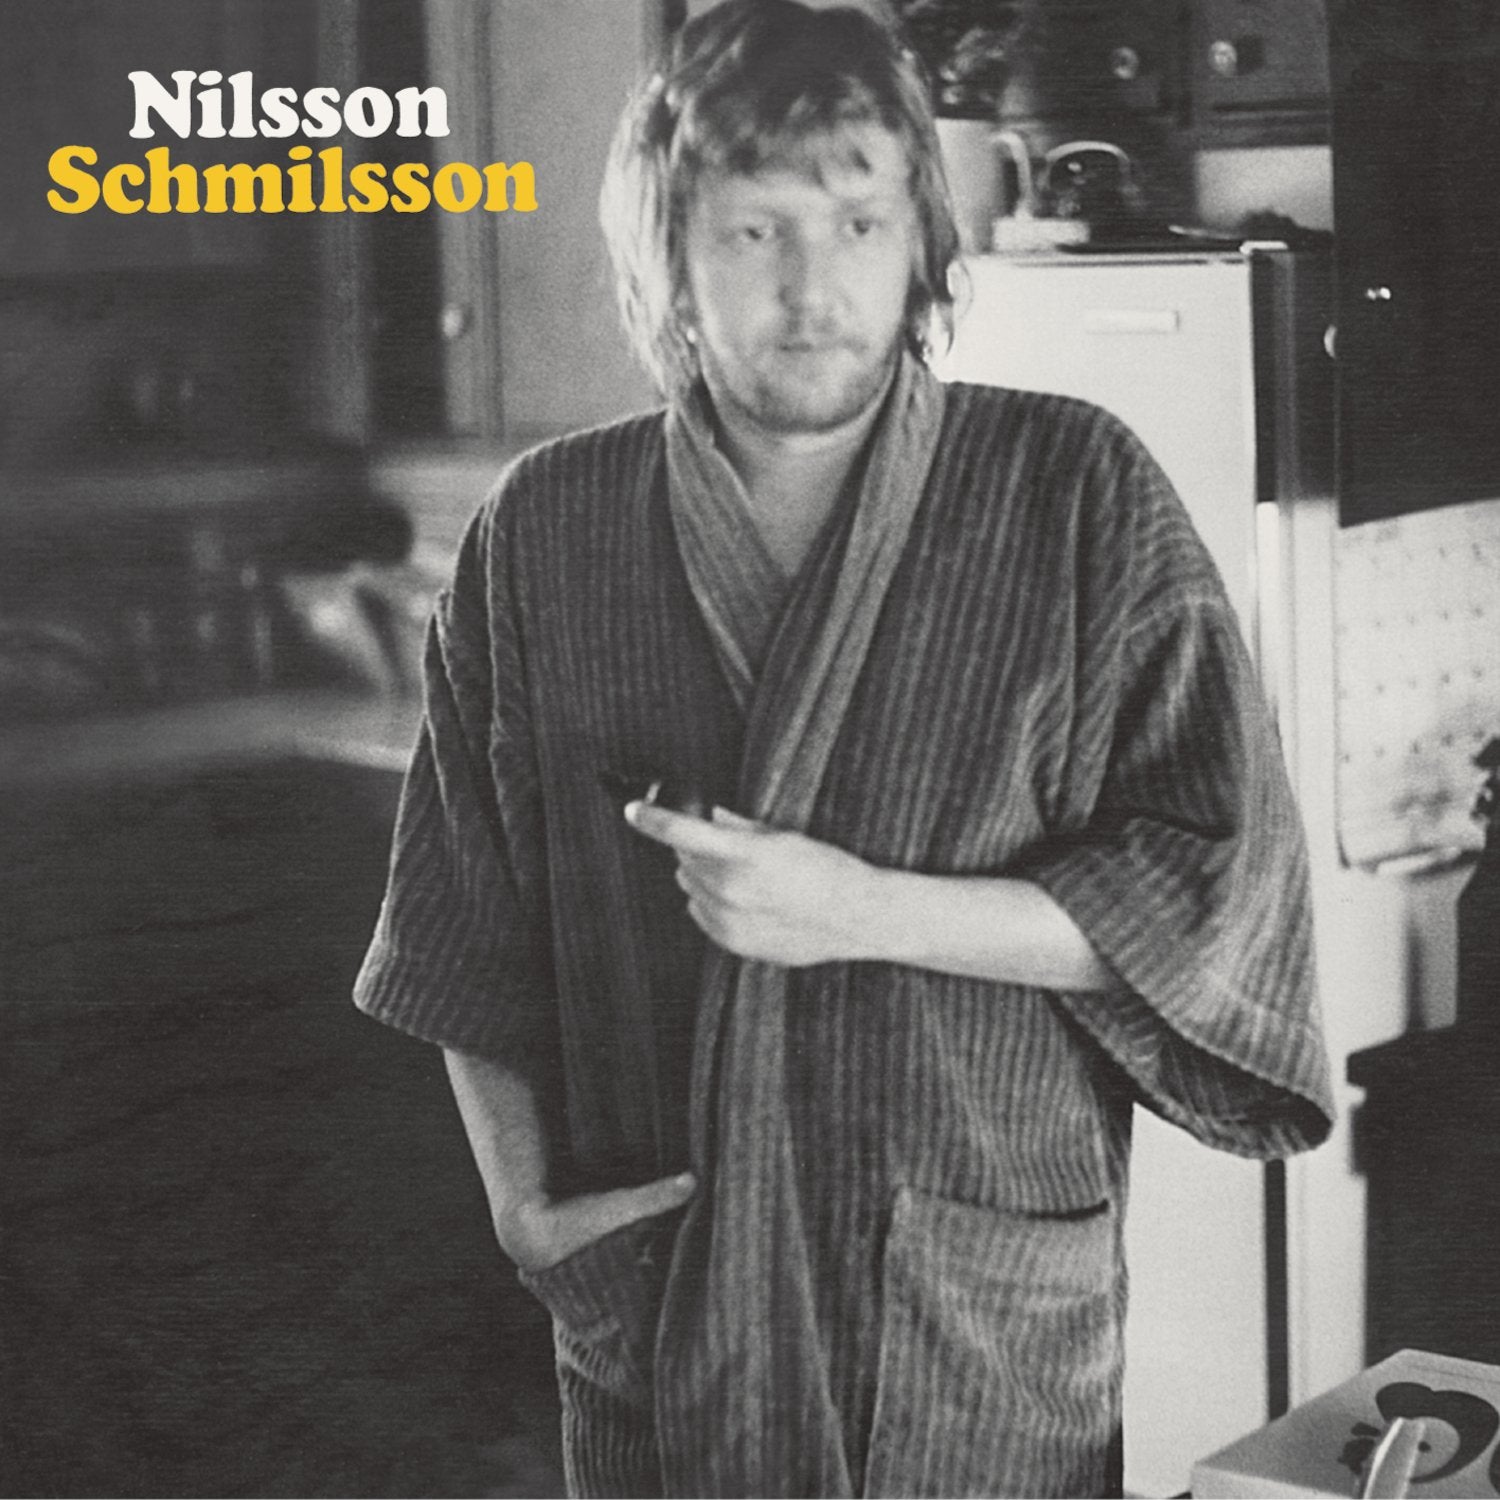 Nilsson Schmilsson (MoFi)